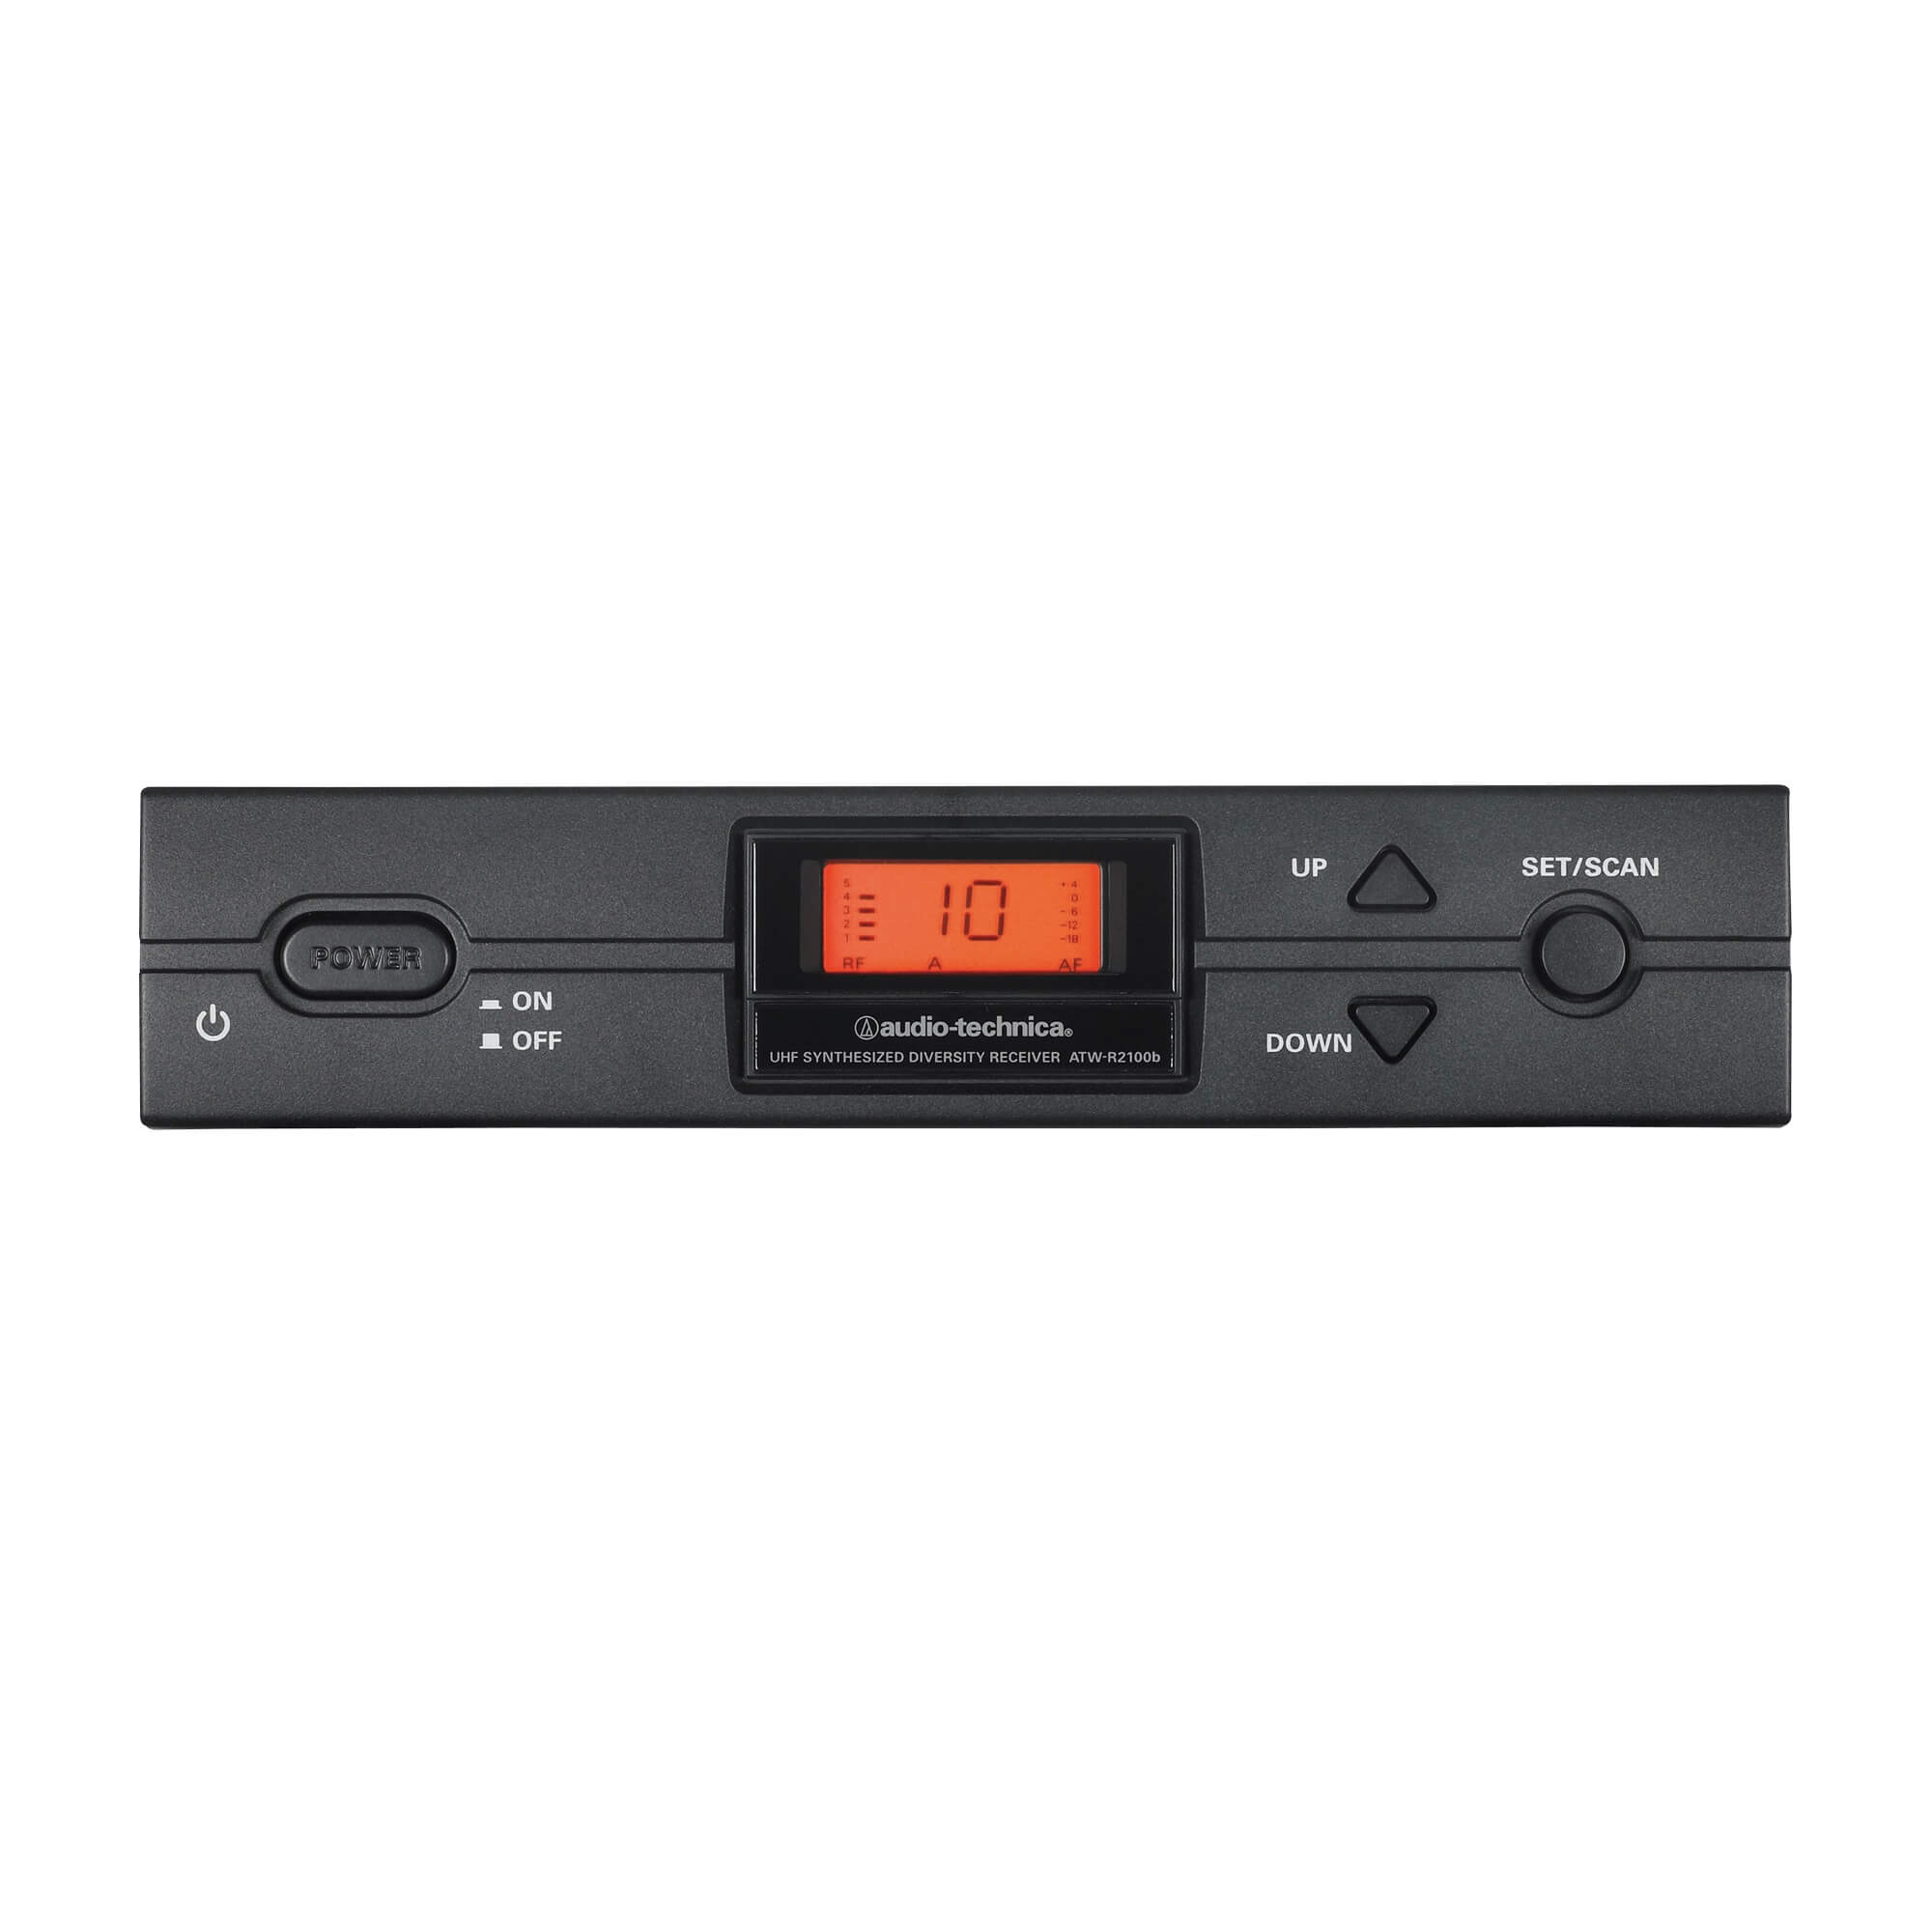 Audio-Technica ATW-R2100c receiver, front